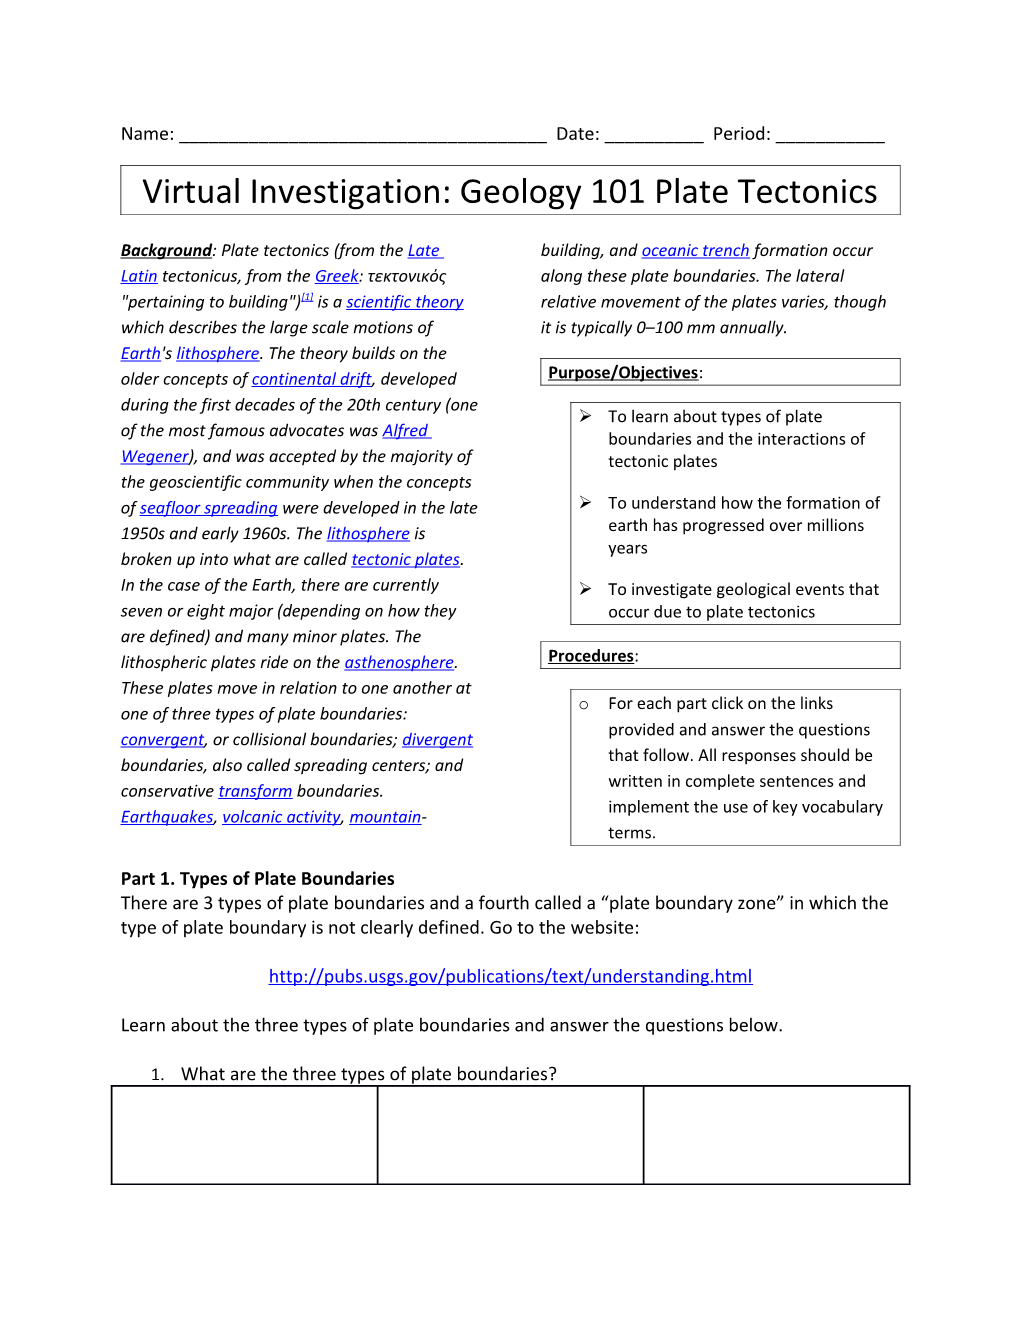 Virtual Investigation: Geology 101 Plate Tectonics